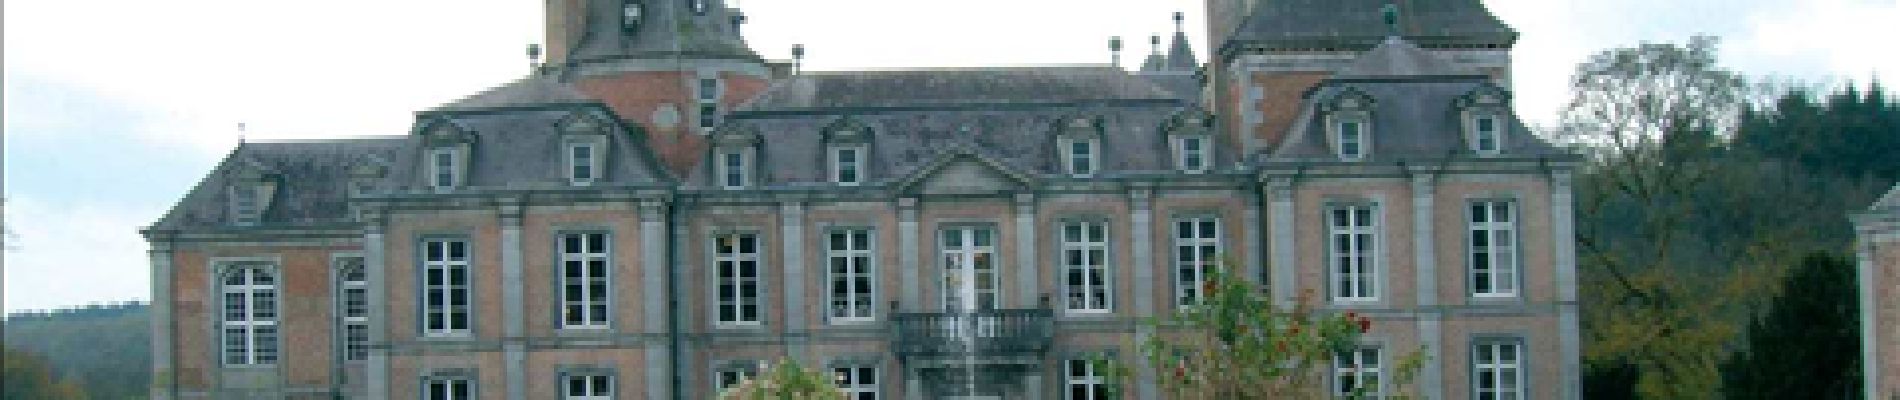 POI Modave - Château de Modave - Photo